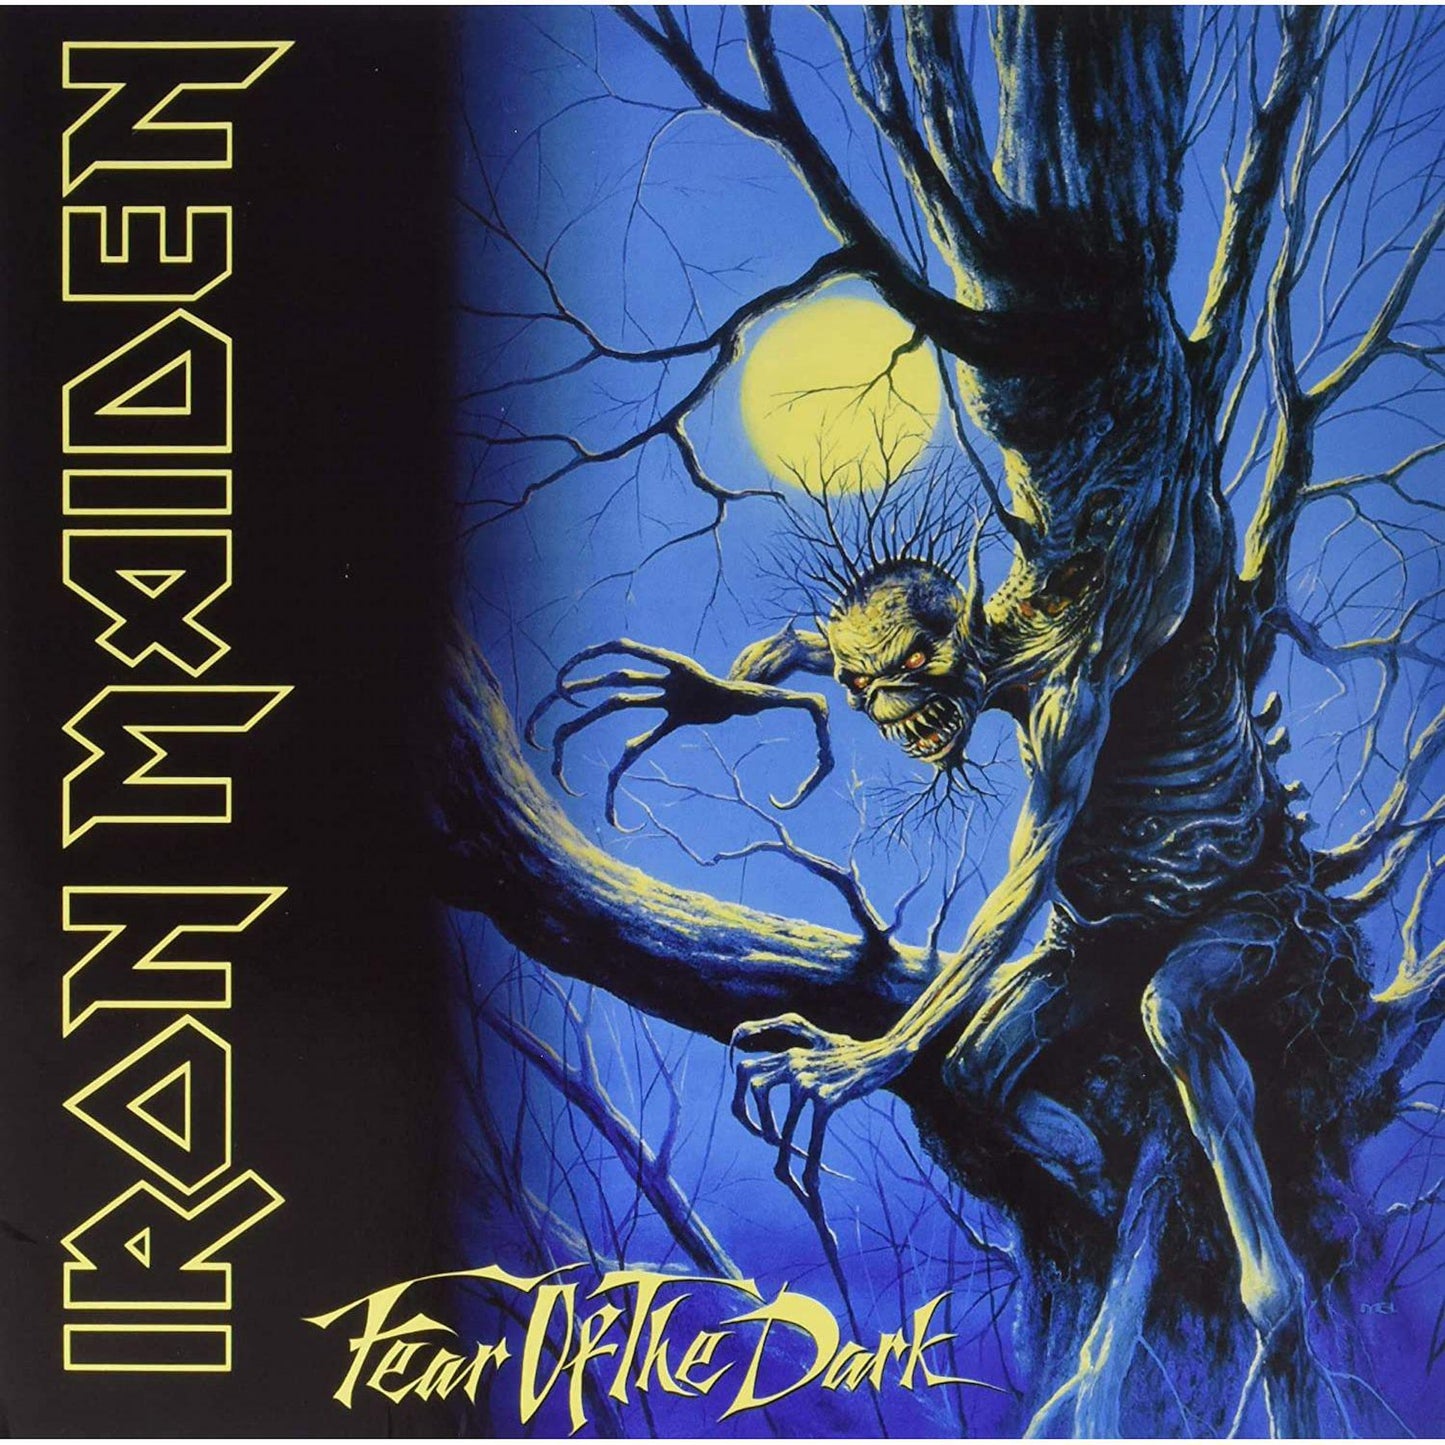 IRON MAIDEN - FEAR OF THE DARK - 2-LP - LP DE VINILO